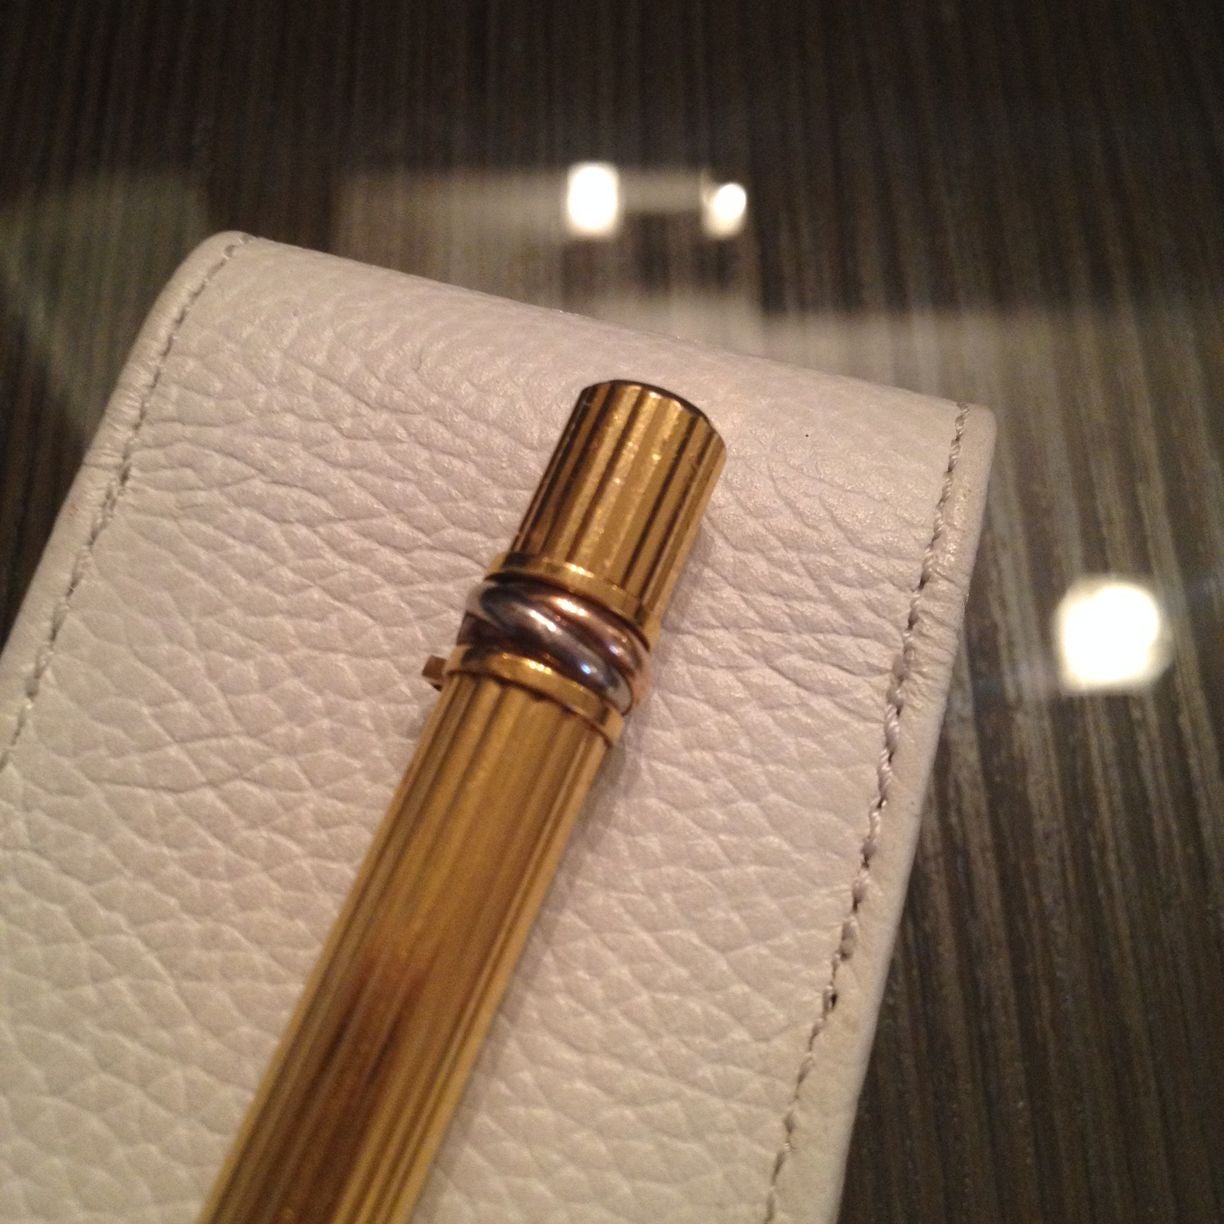 Cartier pen - repair possible 